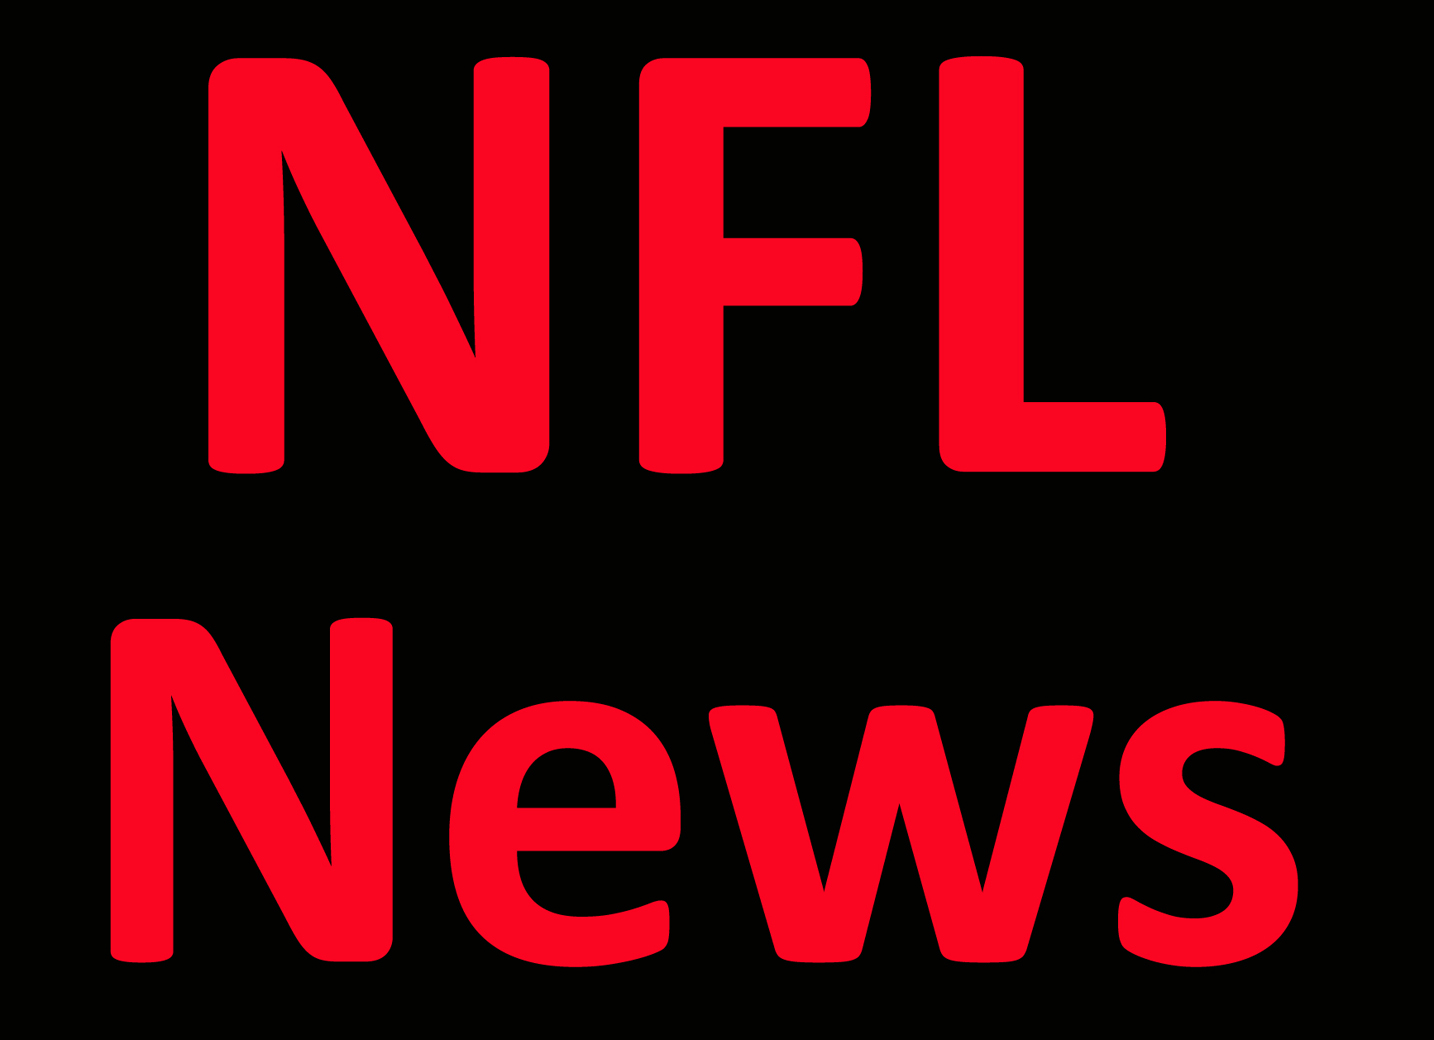 NFL News: Despite rough stretch, Commanders giving Carson Wentz time Per Report